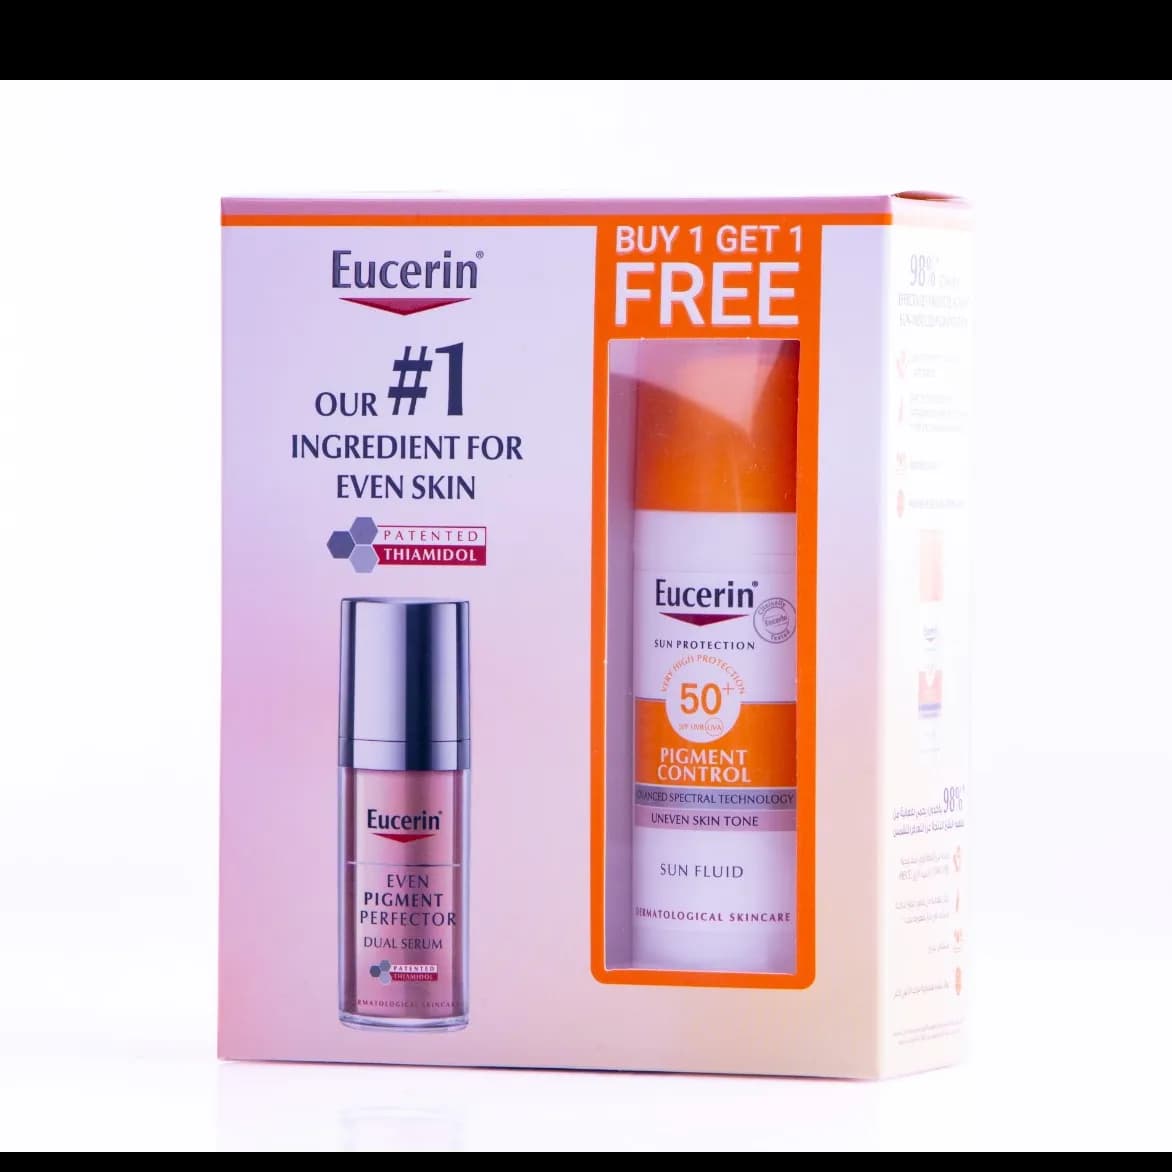 Eucerin Even Pigment Dual Serum + Pigment Control Sun Fluid (Offer Pack )